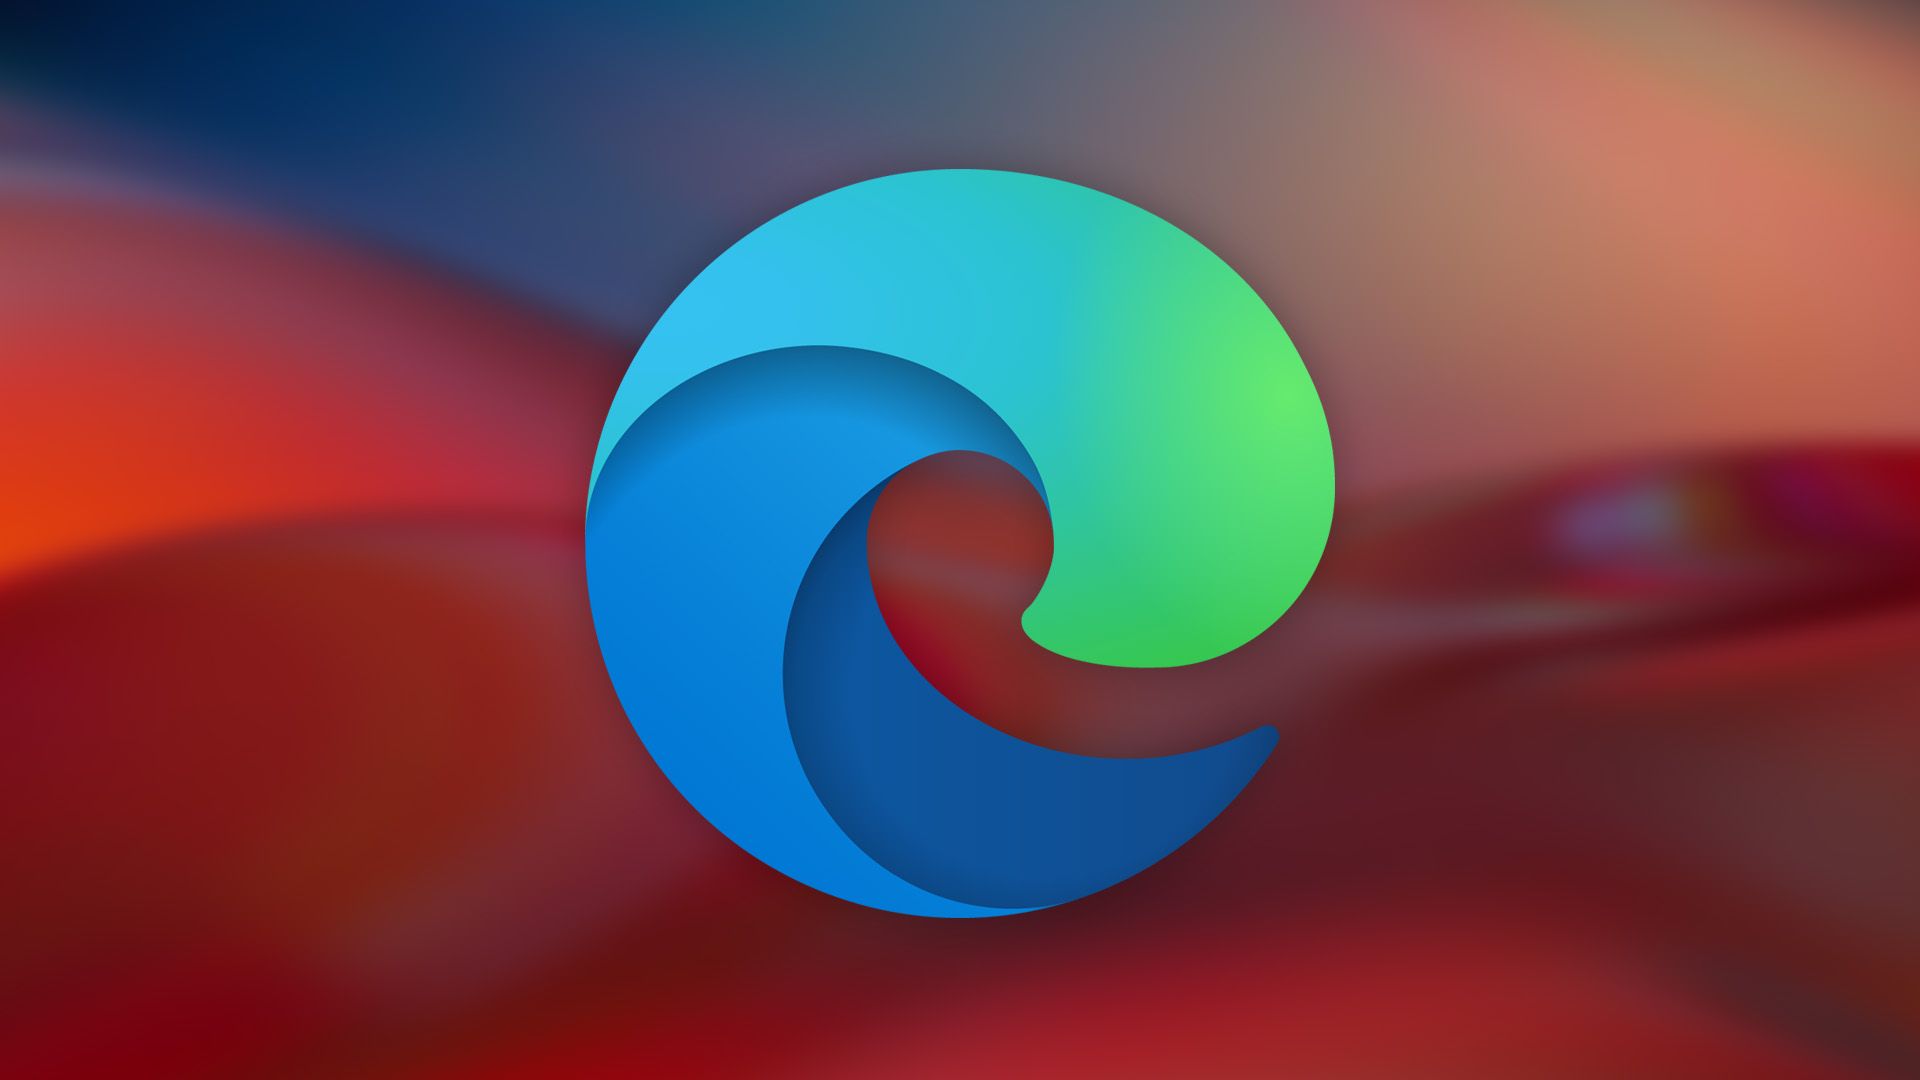 Logotipo do Microsoft Edge